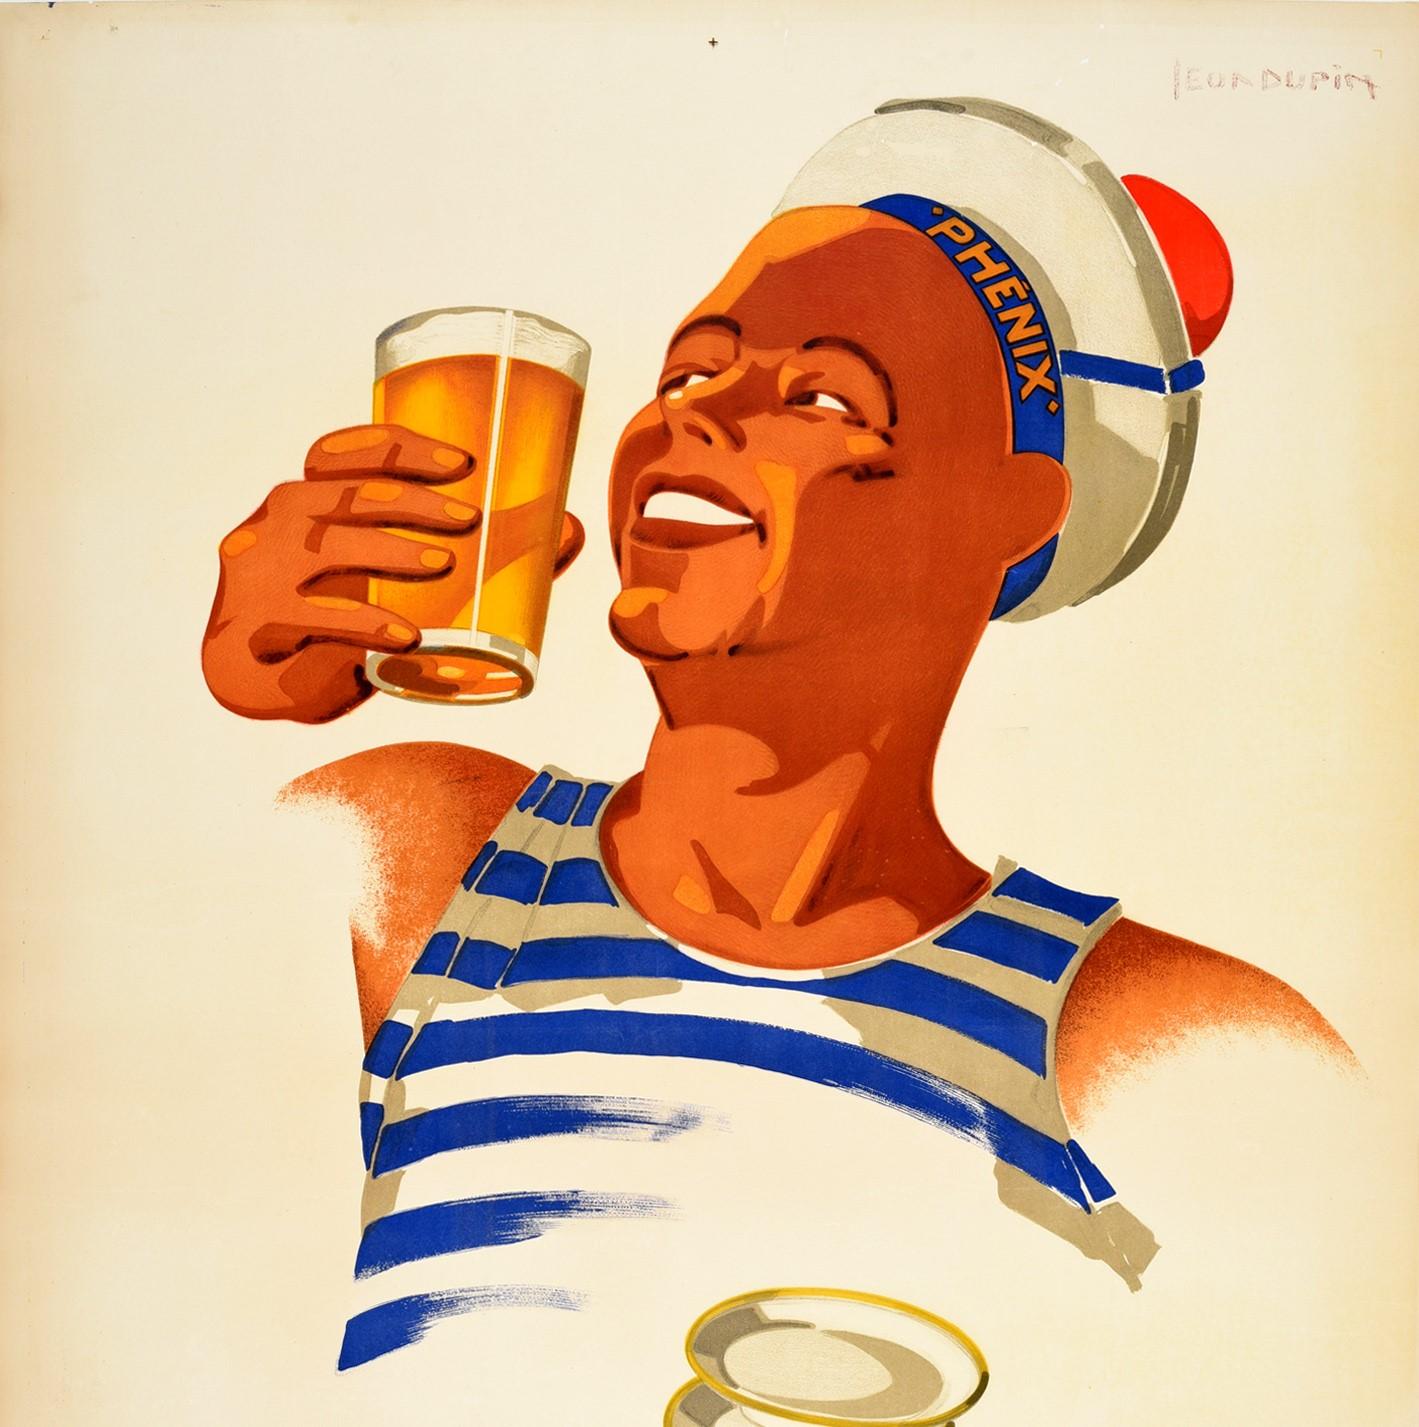 Original Vintage Poster Biere Phenix Beer Sailor Design Drink Advertising Art - Print by Leon Dupin